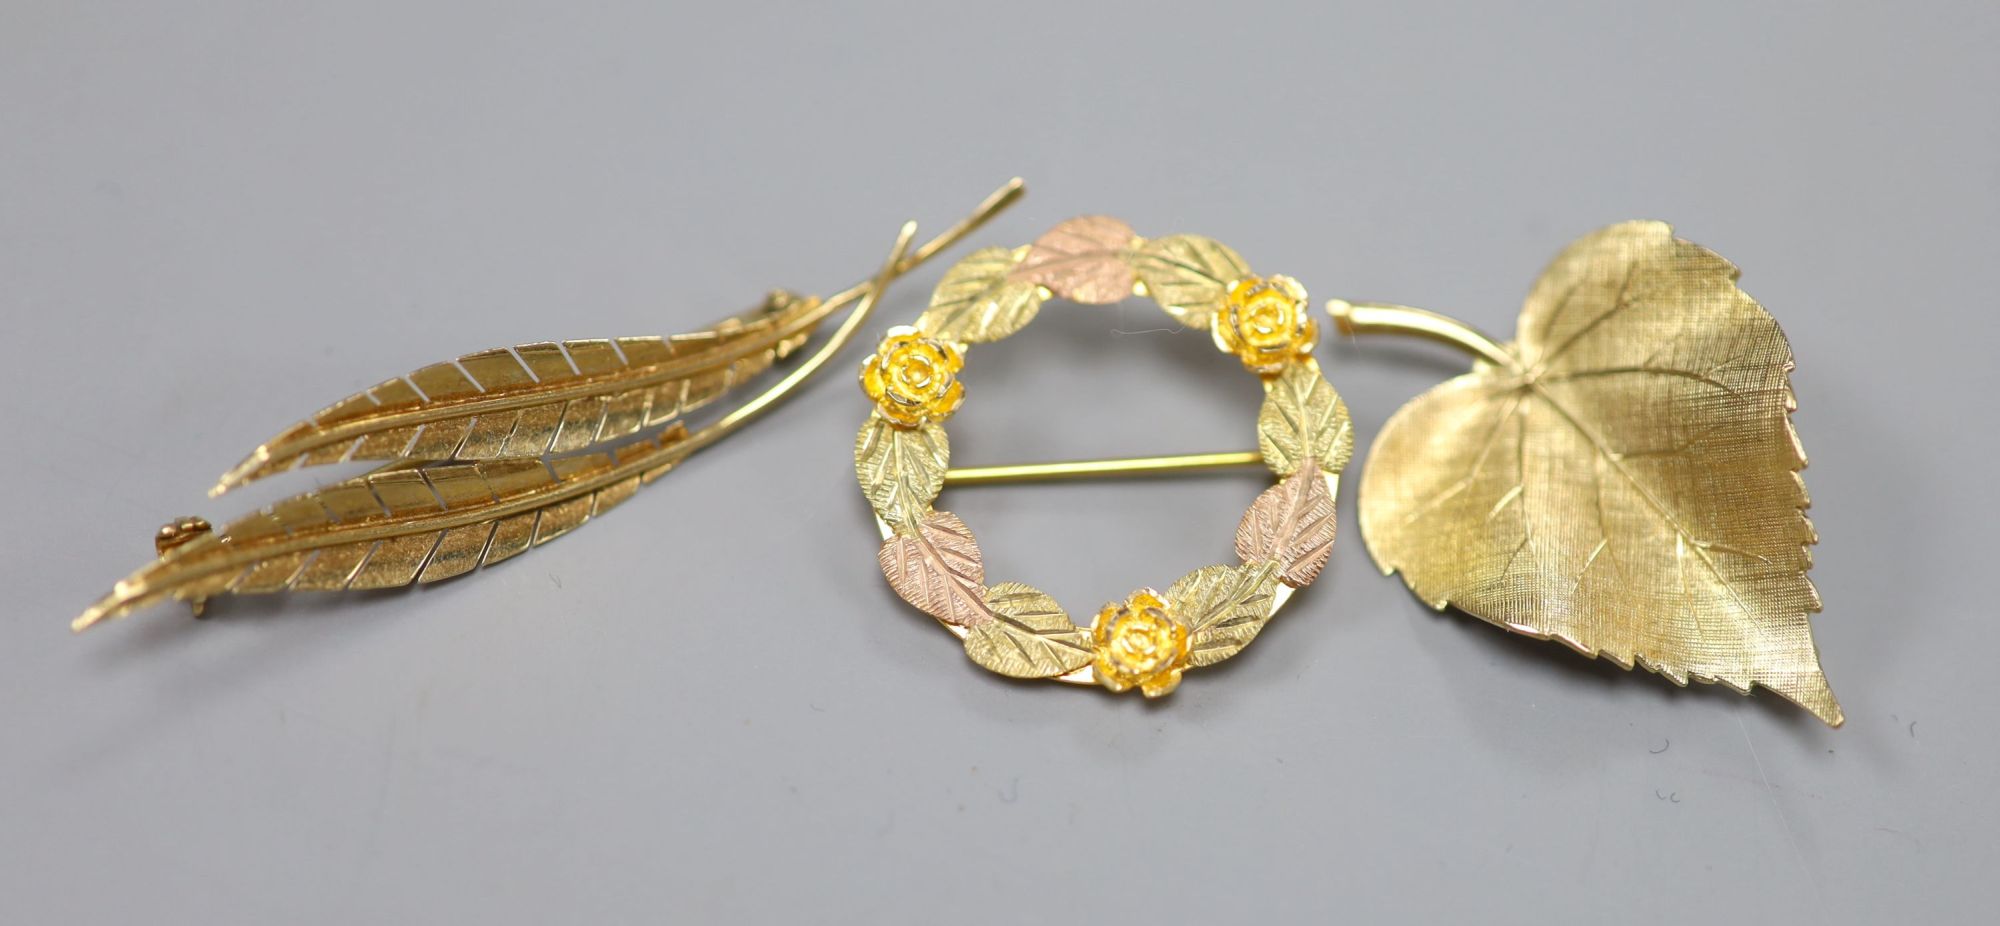 A 585 yellow metal double leaf brooch, 51mm a 9ct gold leaf brooch and a 10k tri-colour foliate wreath brooch (3)